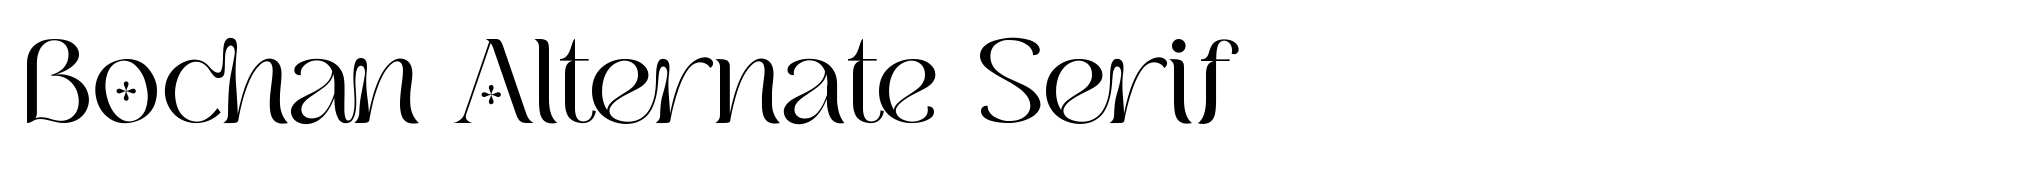 Bochan Alternate Serif image